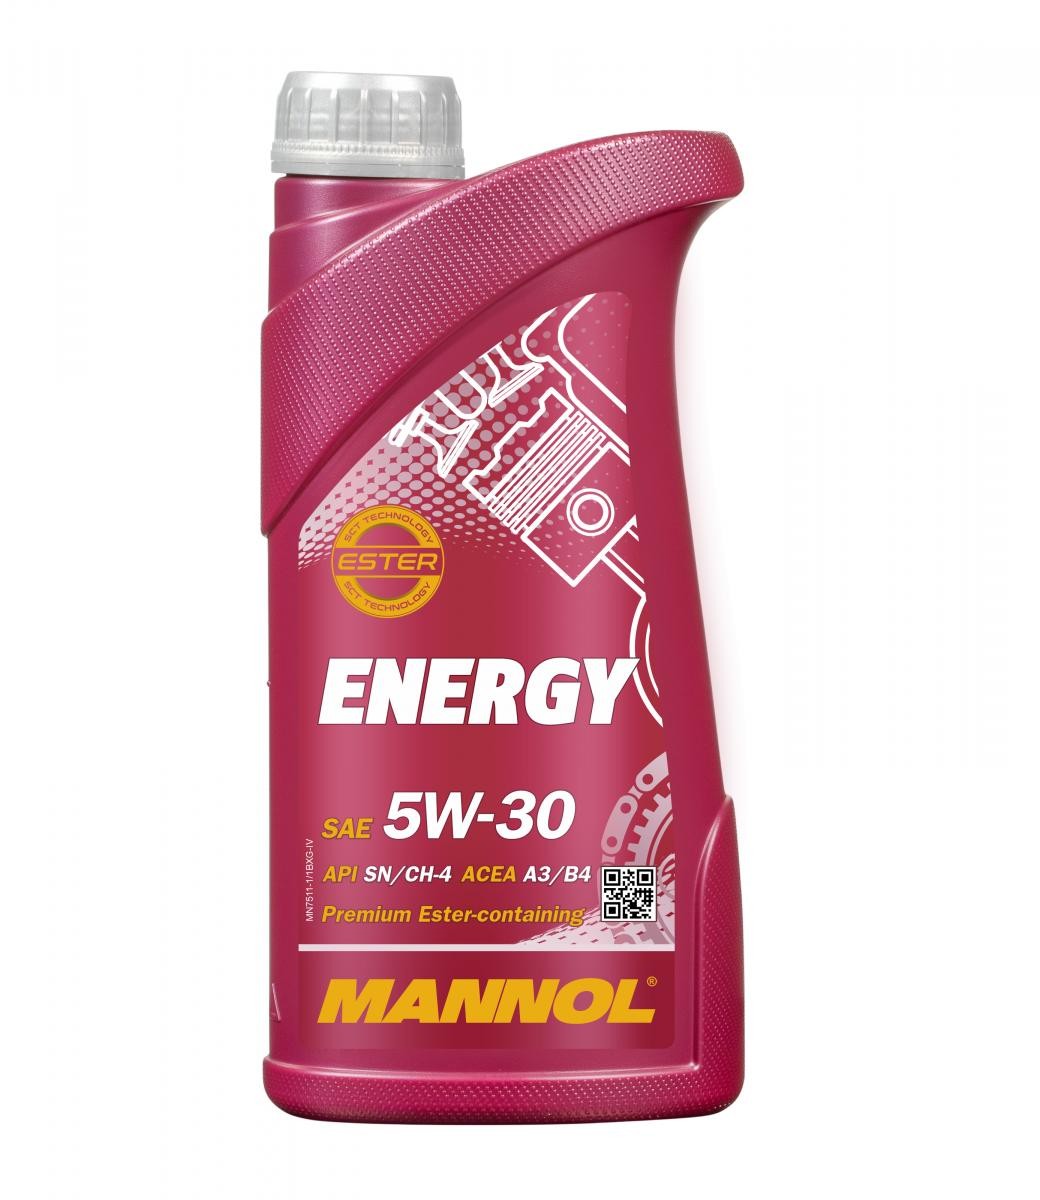 MANNOL MN7511-1 Auto motorolie 5W-30, 1L, Deels synthetische olie Mini in originele kwaliteit